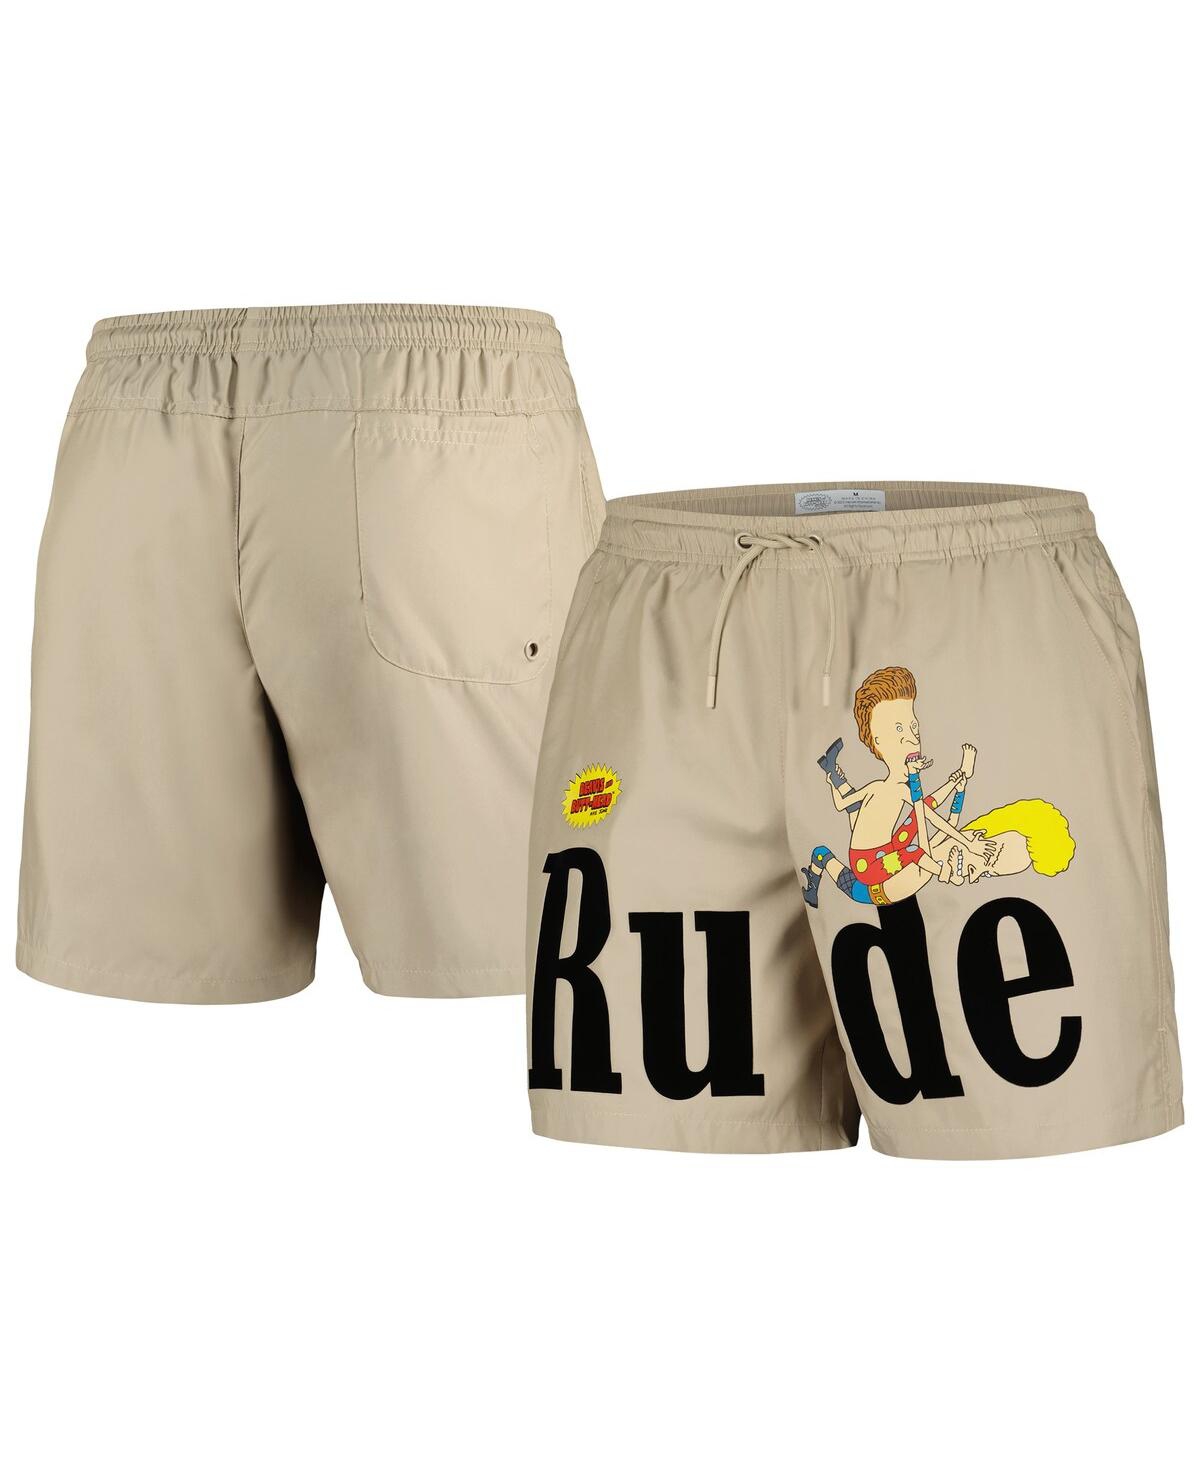 Men's Khaki Beavis and Rude Woven Shorts - Khaki